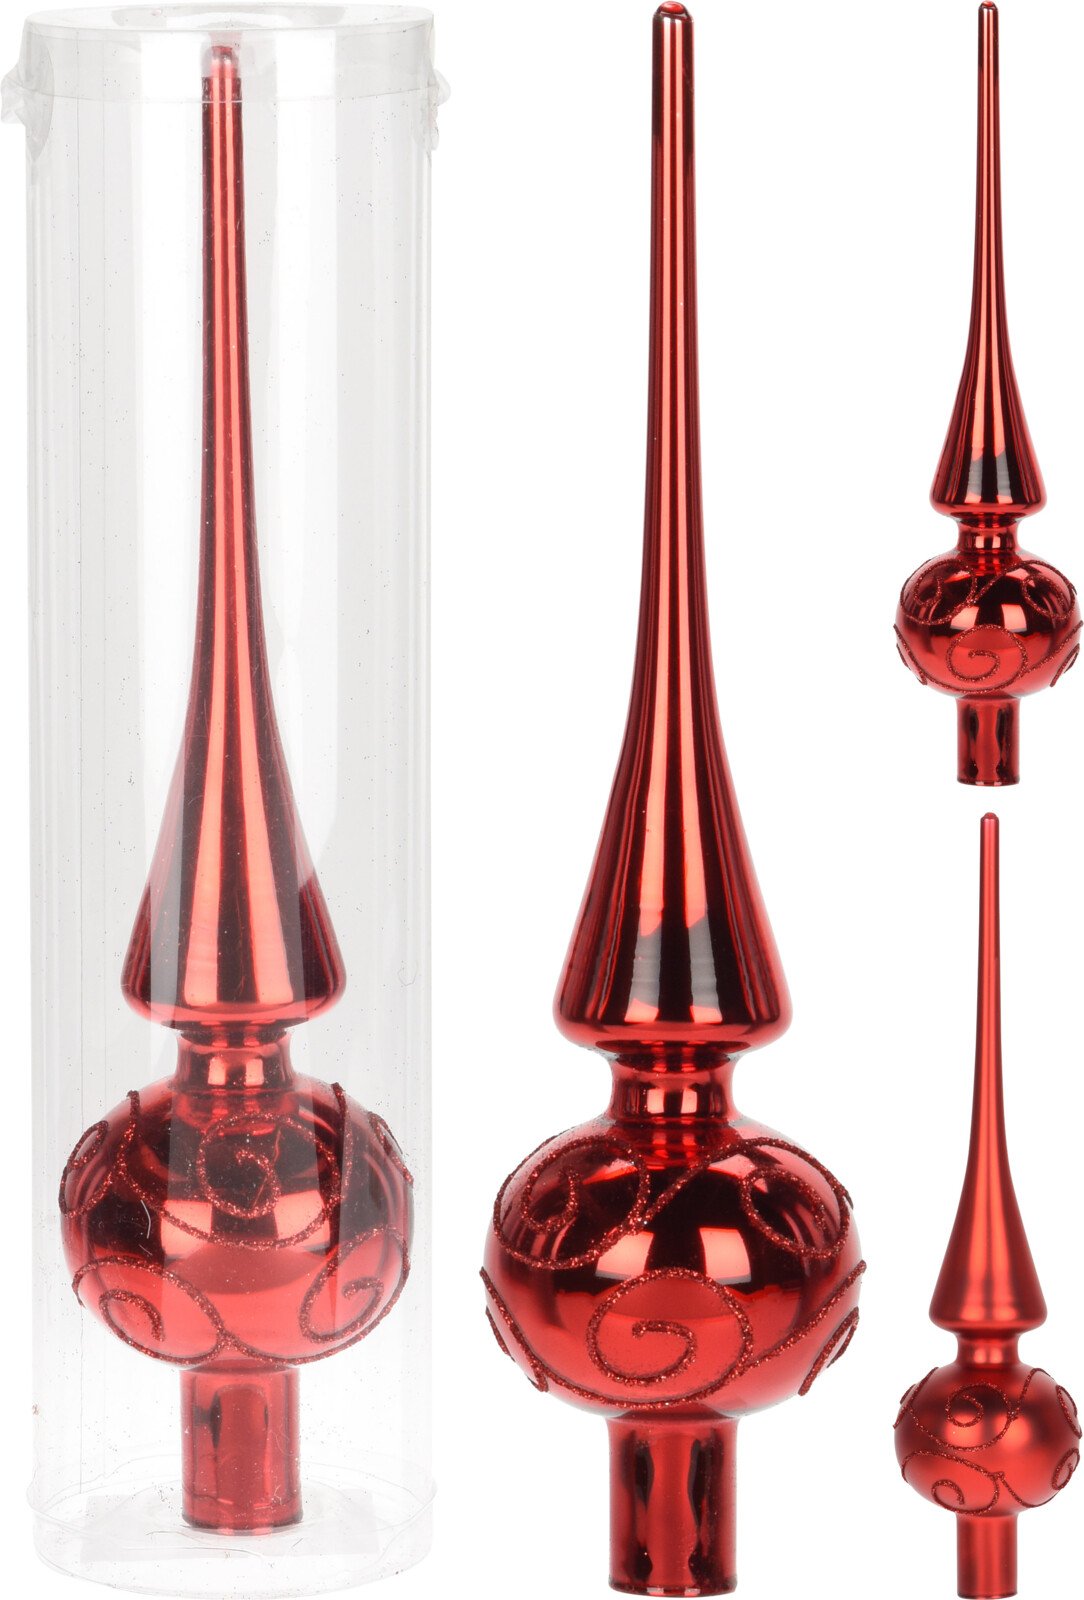 Eglės viršūnė GLASS, raudonos sp., 2 rūšys, 25 cm